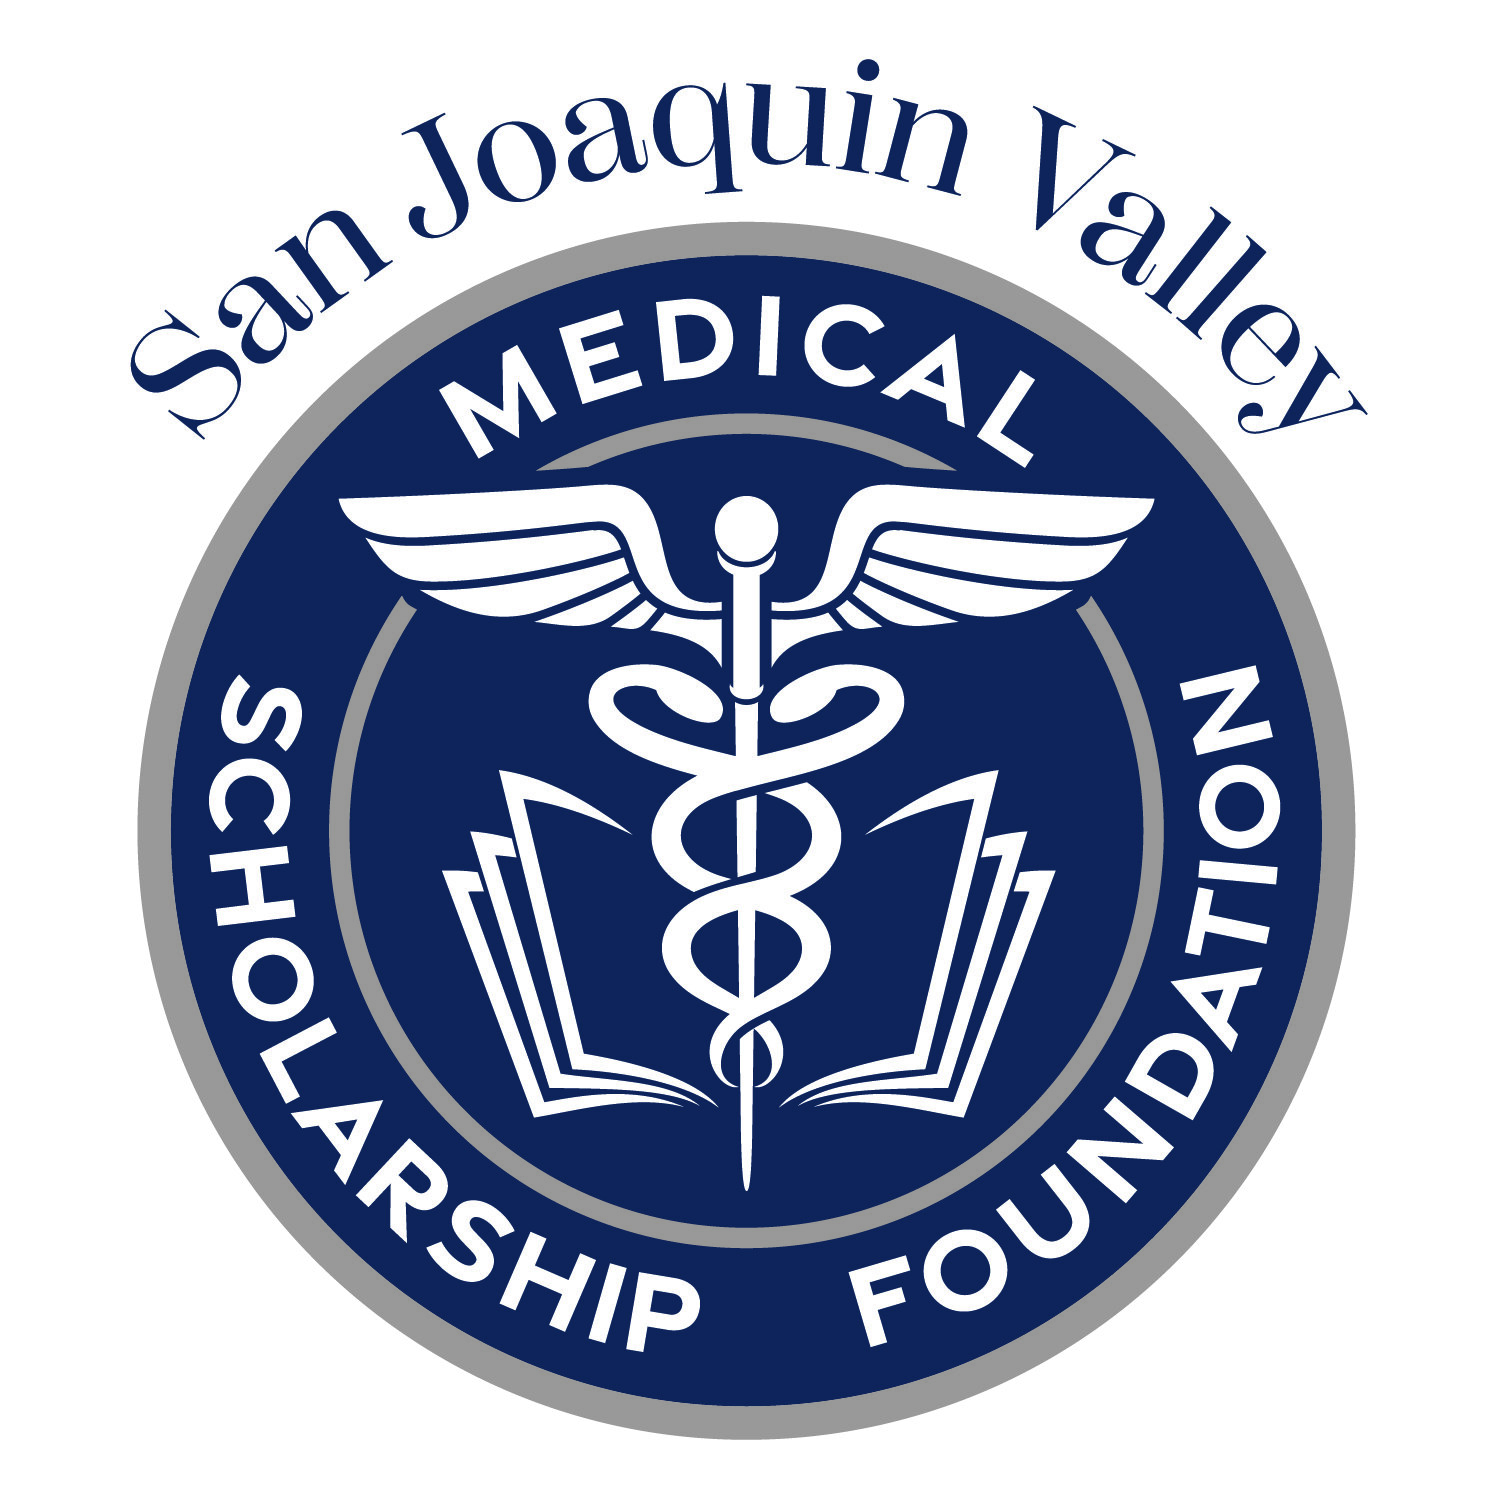 San Joaquin Valley Medical Scholarship Foundation  